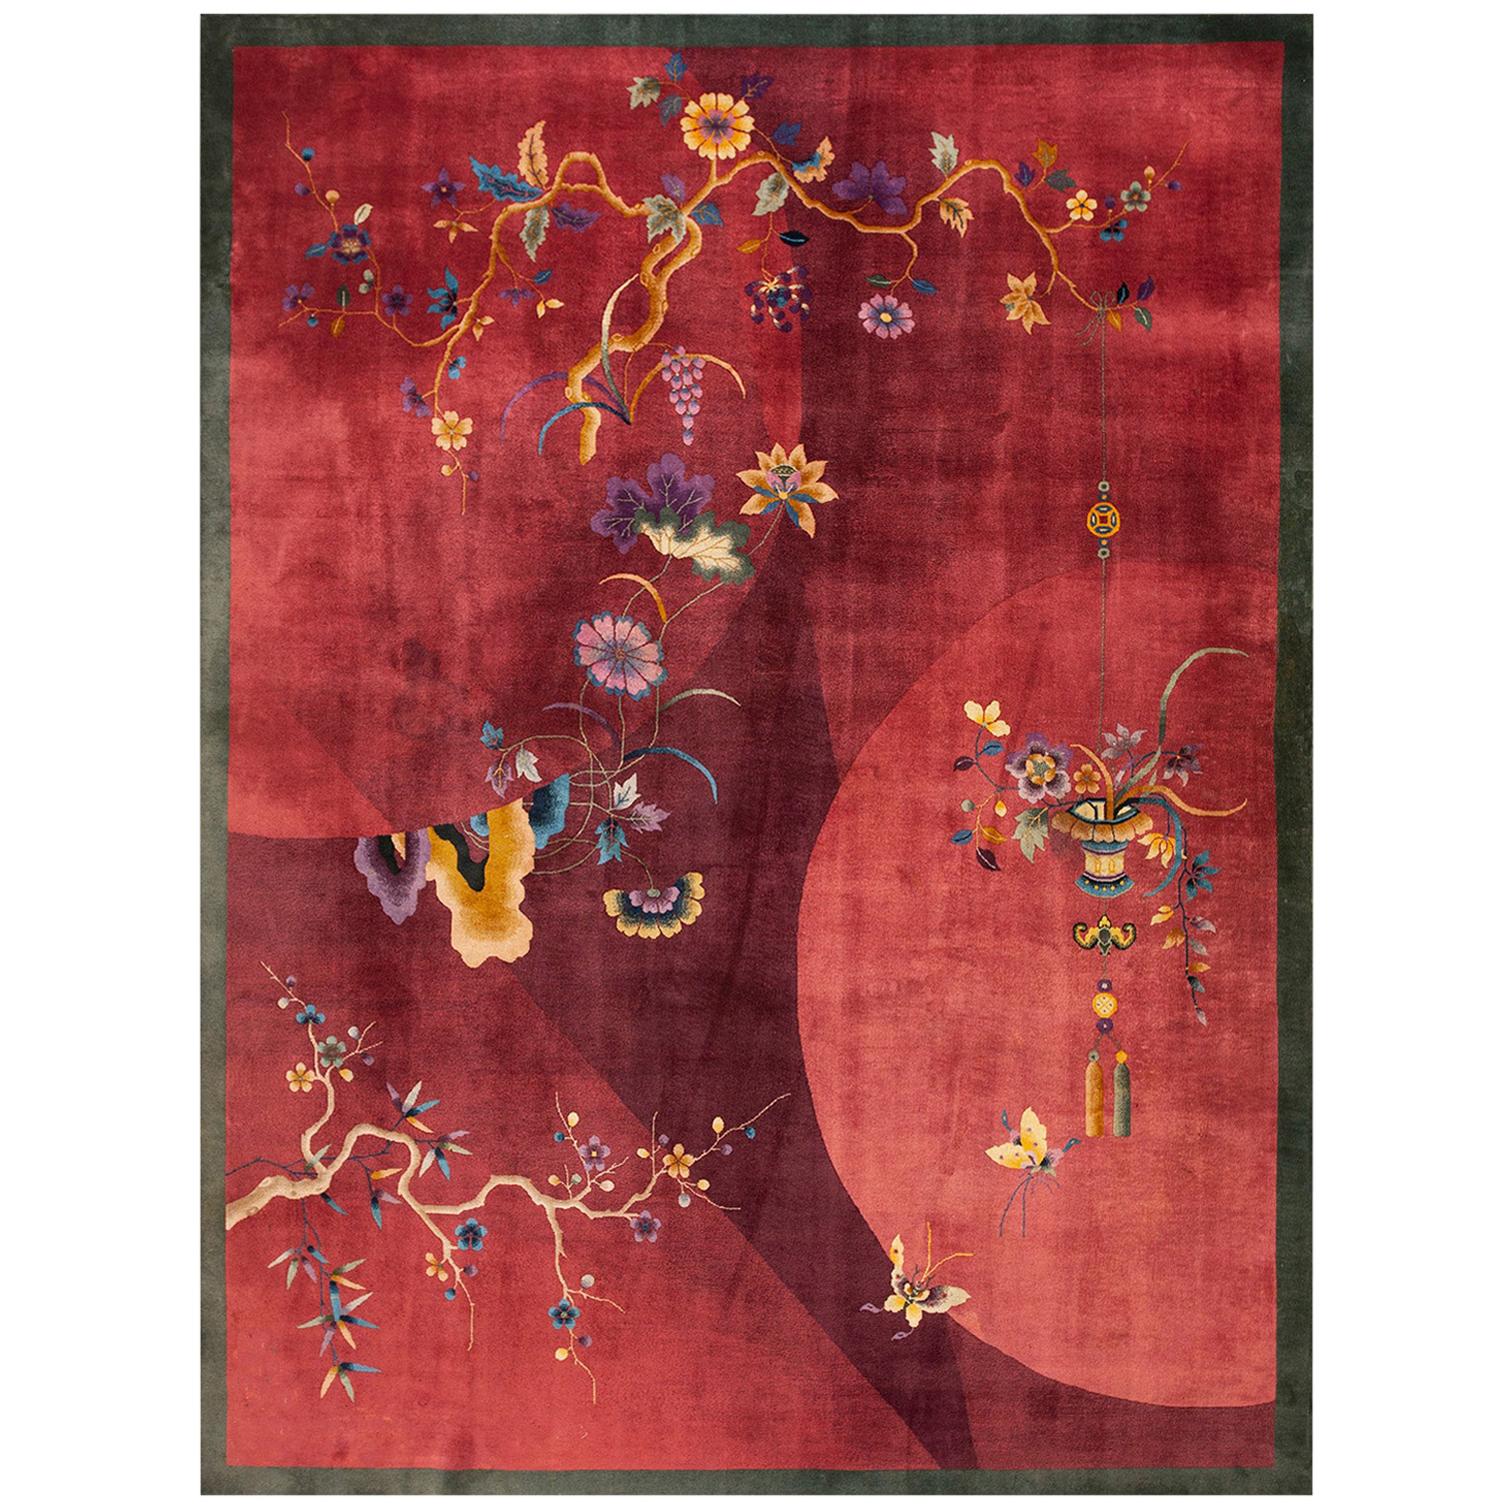 1920s Chinese Art Deco Carpet by Nichols Workshop ( 9' x 11'6" - 275 x 350 ) For Sale